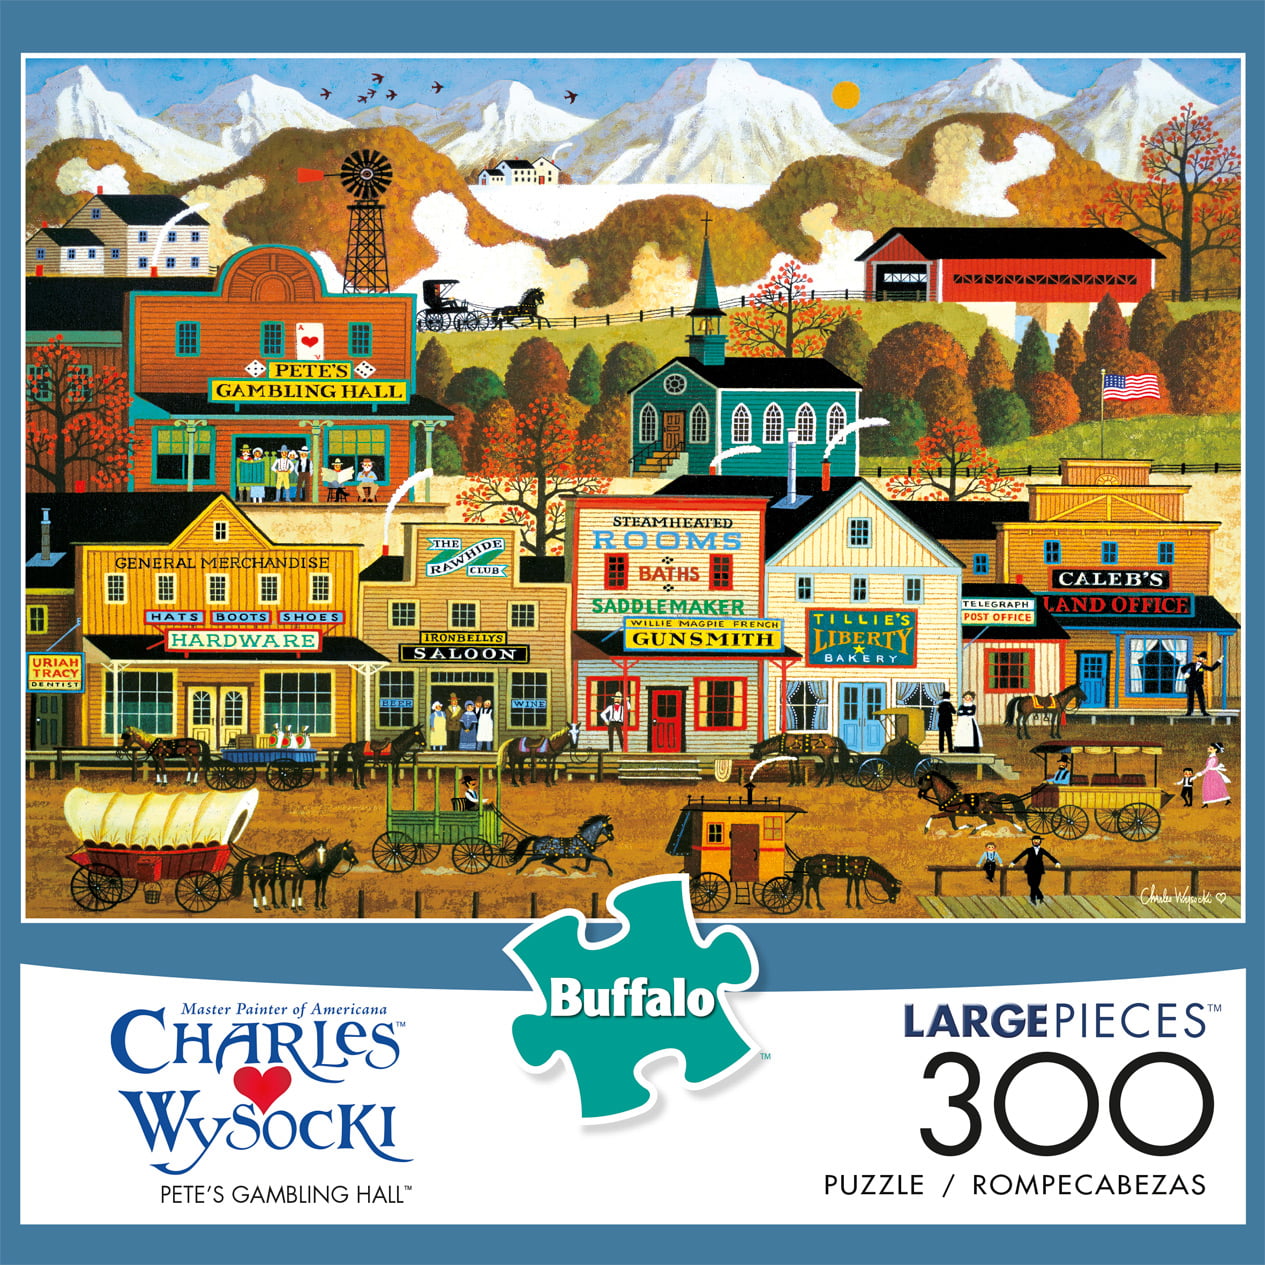 Buffalo 300 Piece Puzzle Charles Wysocki Sugar & Spice Sweet Treats 